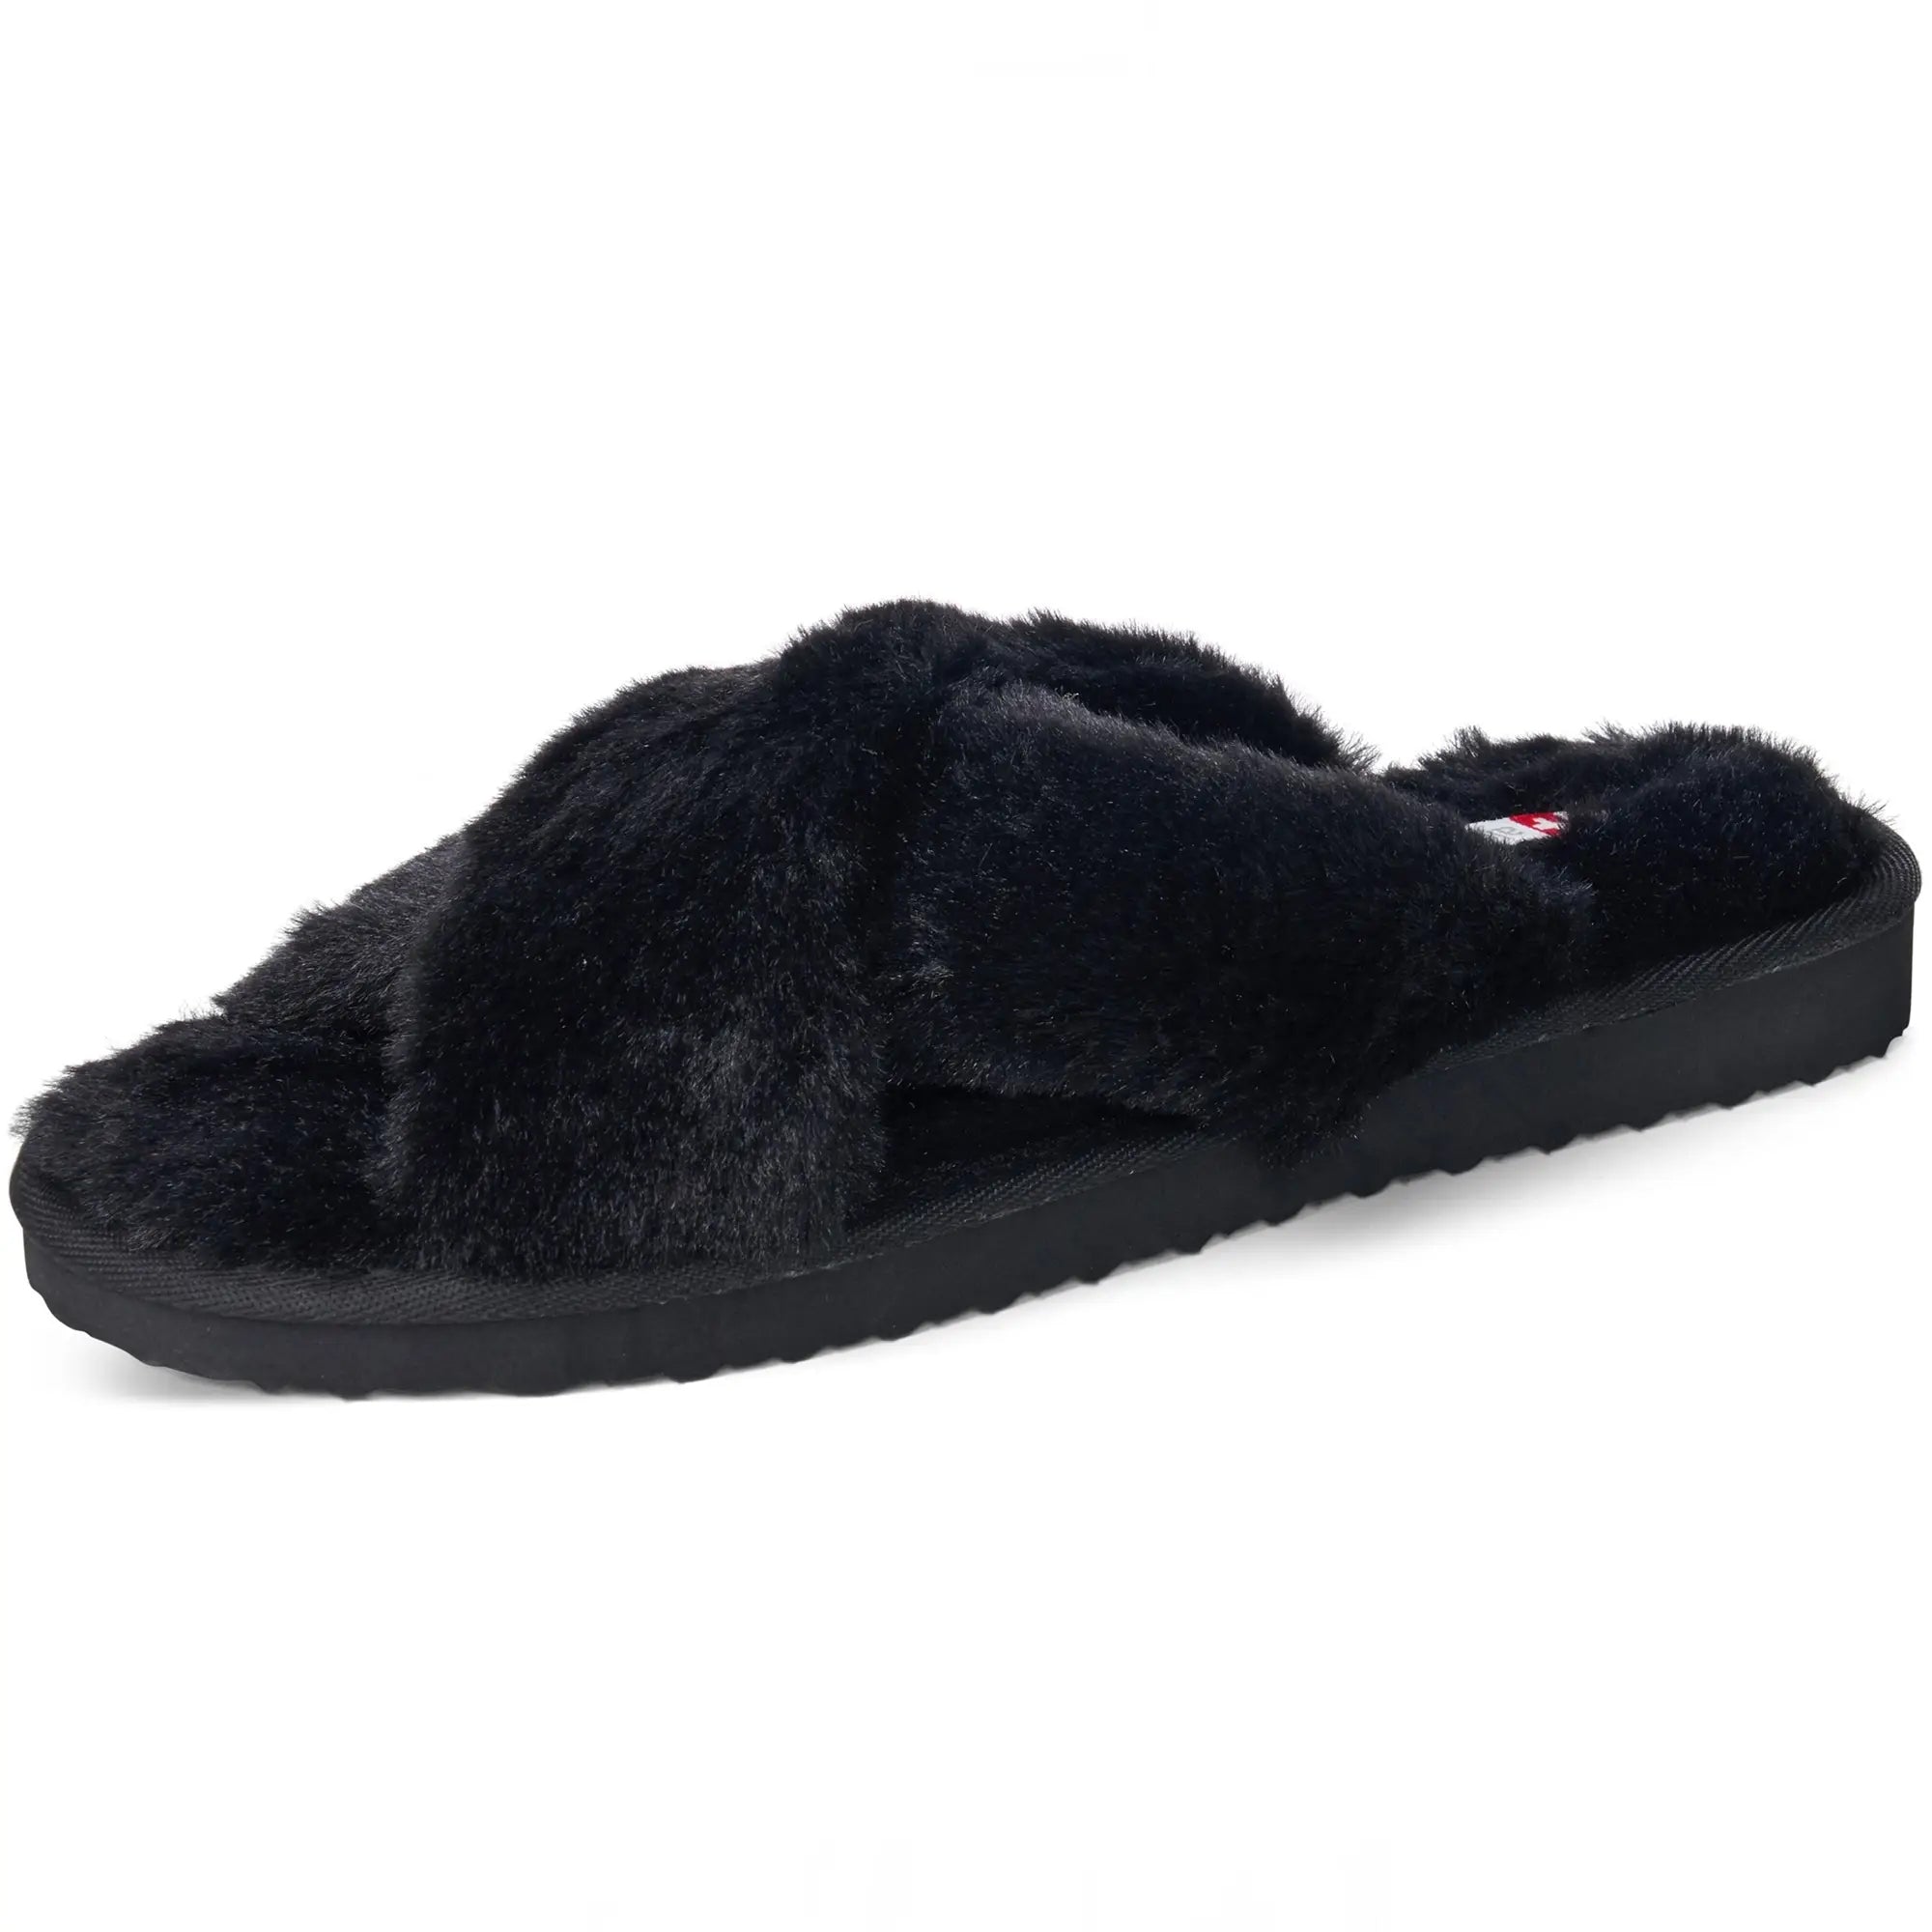 Carvela Women's Koat Fur Slide Sandals - Black | Allsole